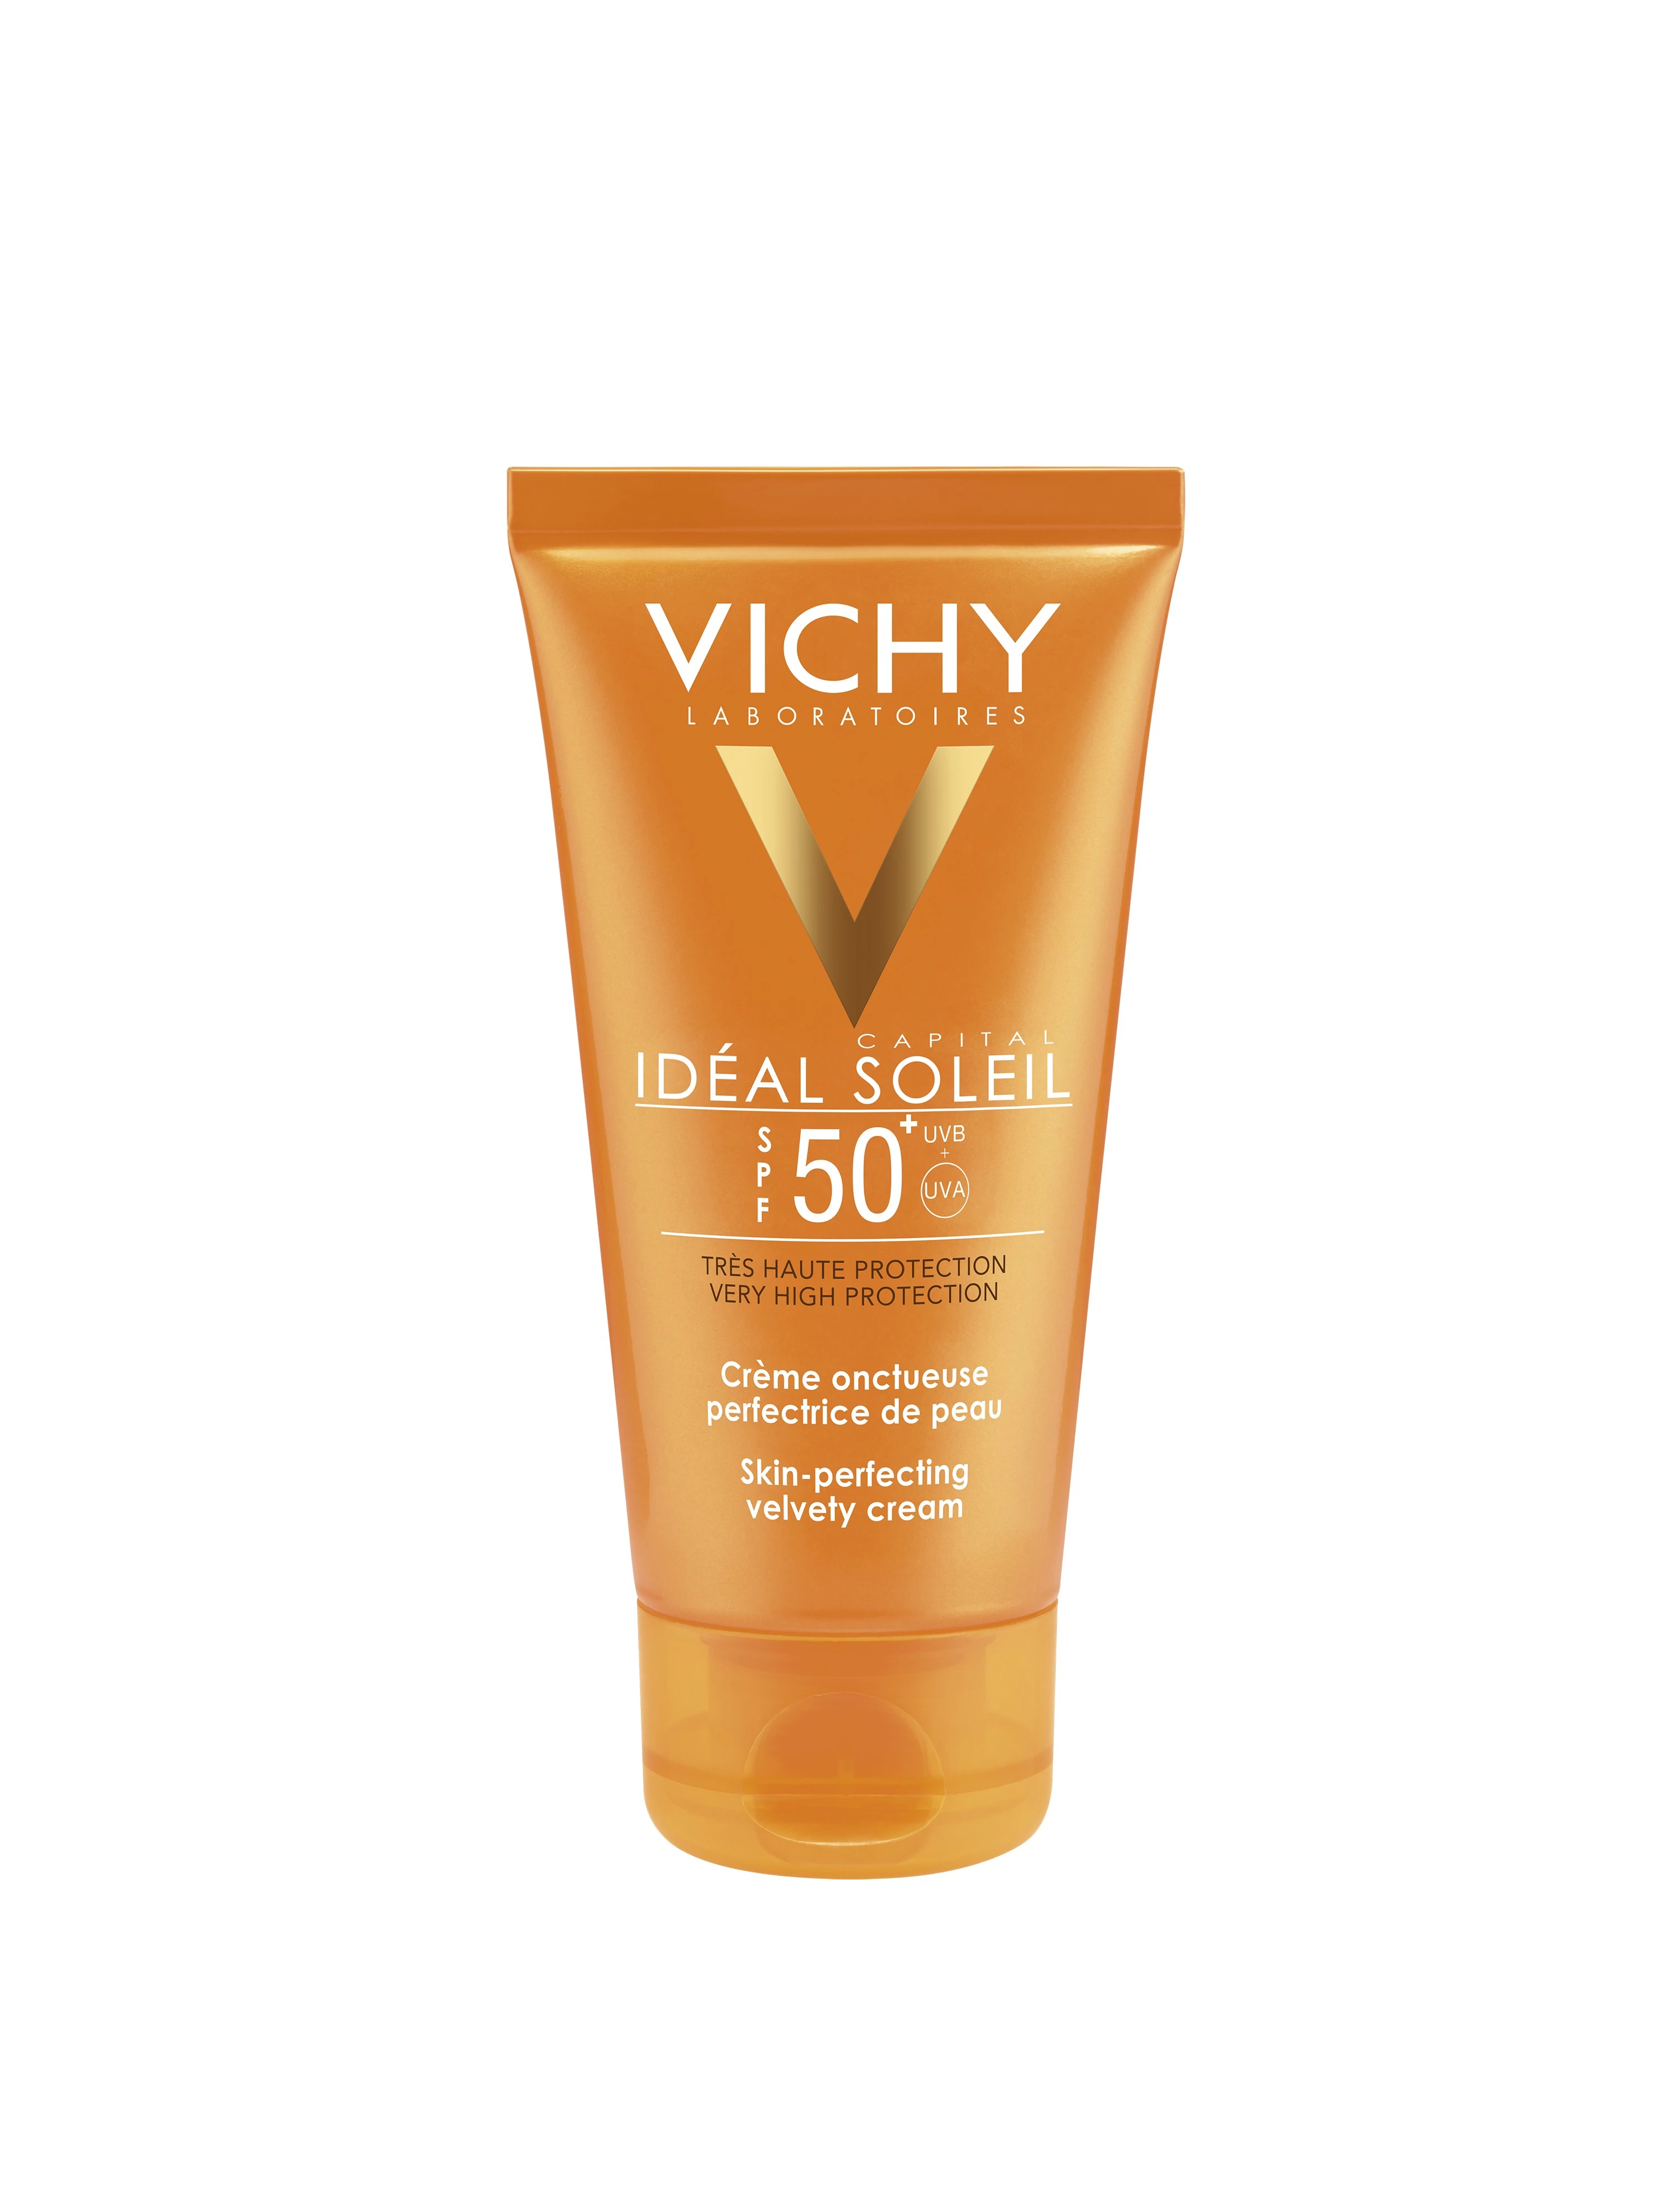 Vichy Ideal Soleil Crema untuosa SPF 50, 50ml.